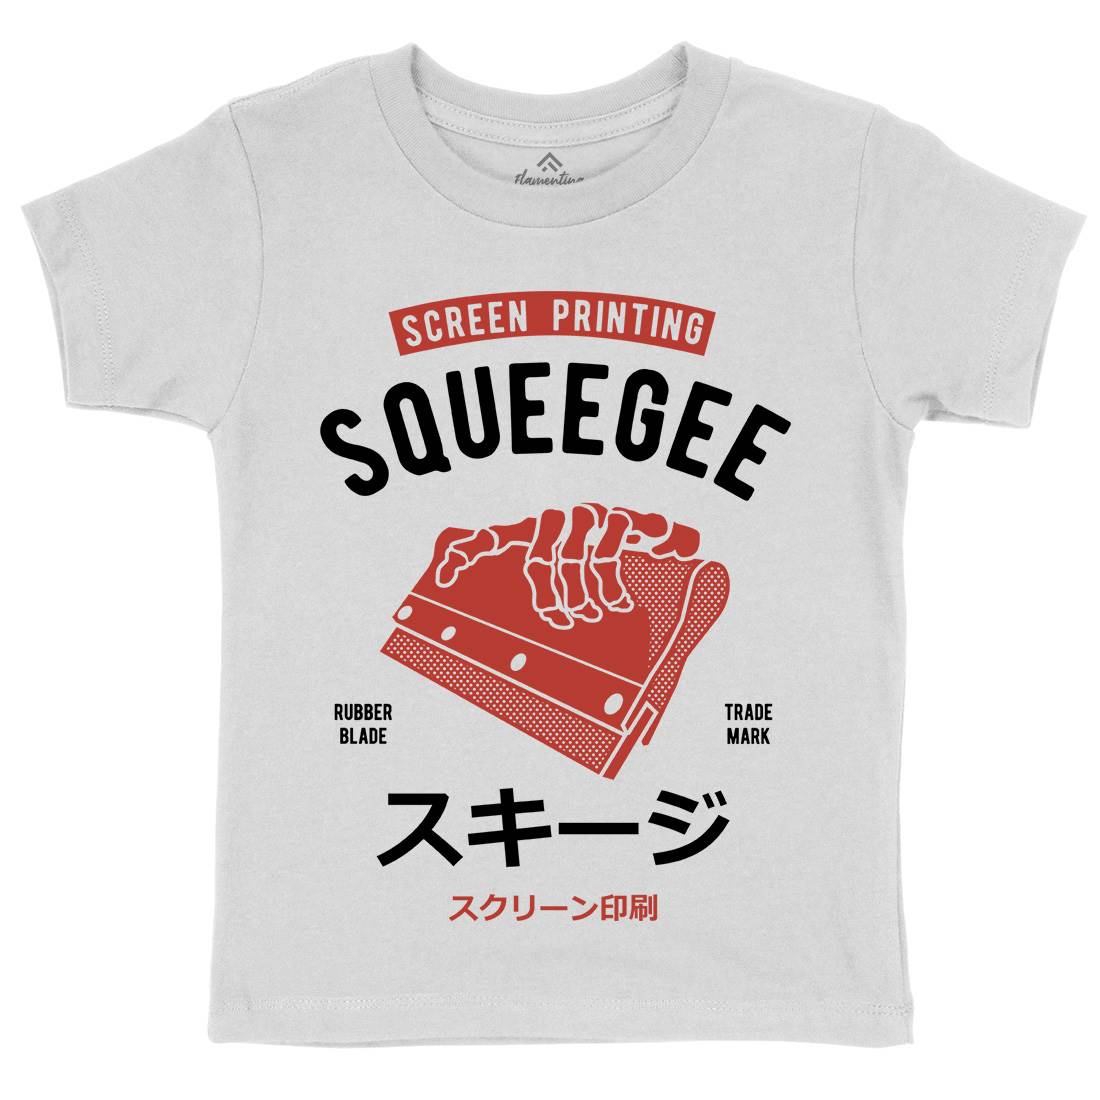 Squeegee Social Club Kids Organic Crew Neck T-Shirt Work A282